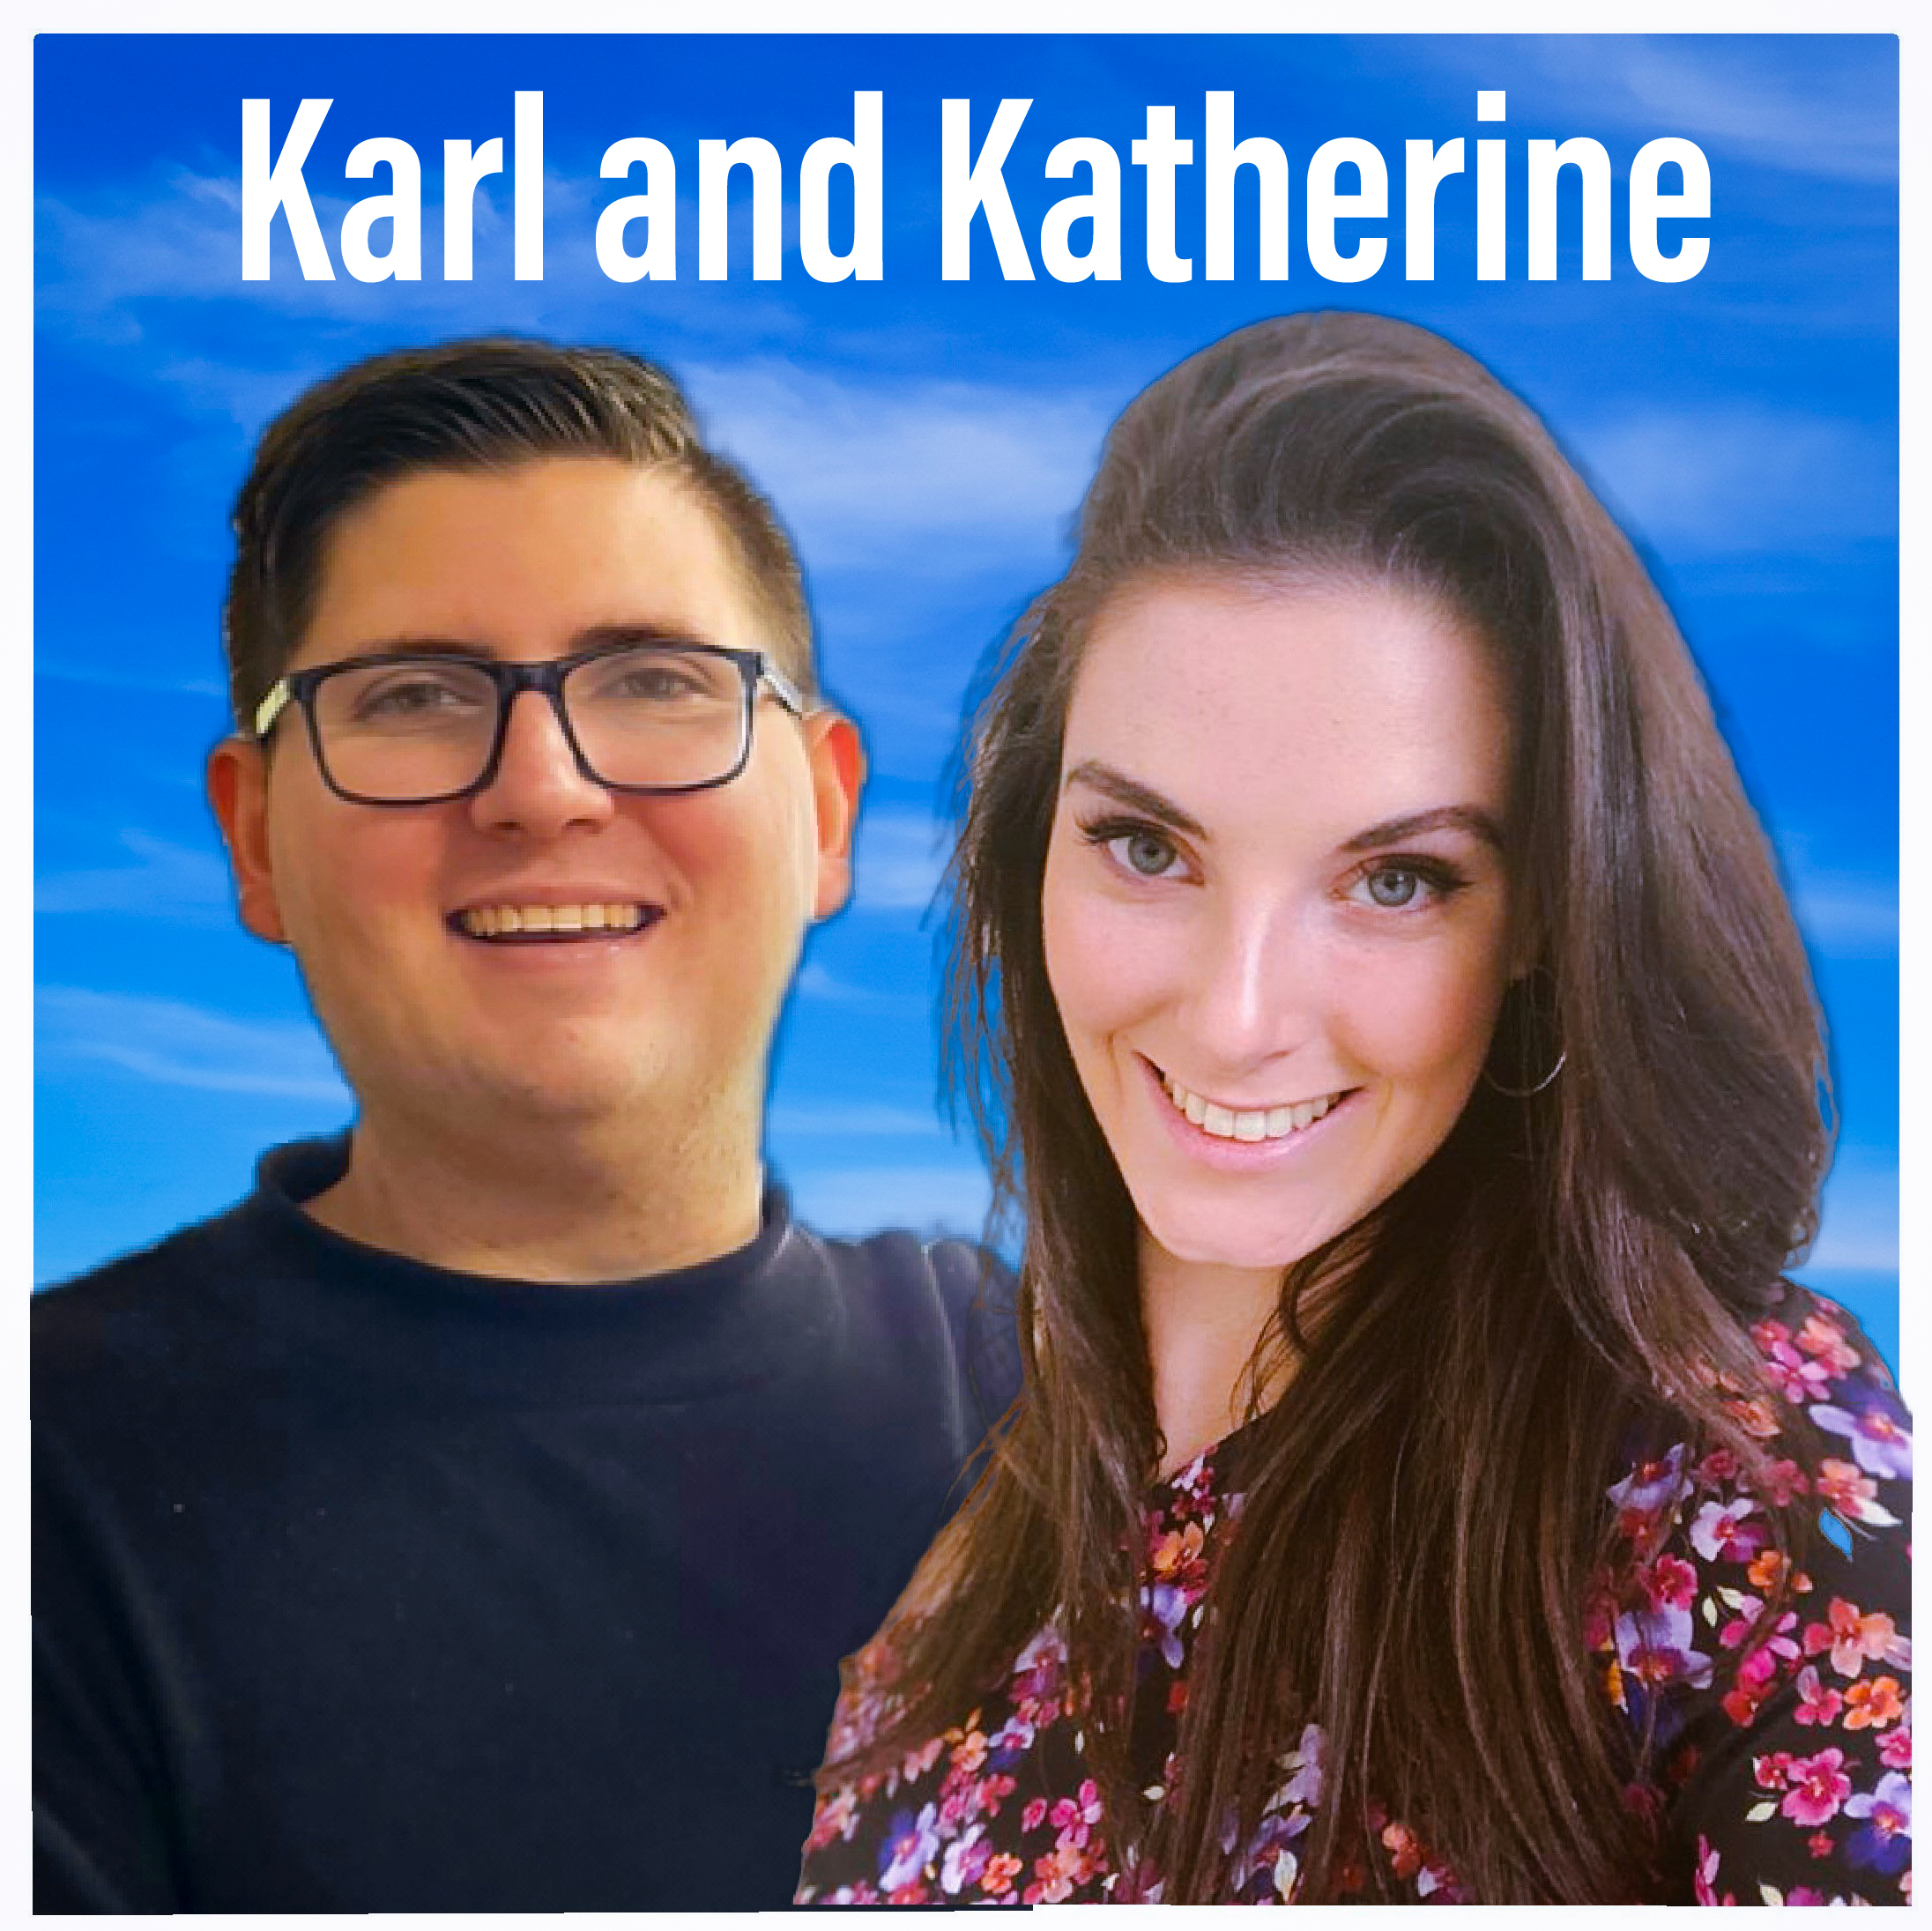 Karl and Katherine - Friday 2nd April 2021